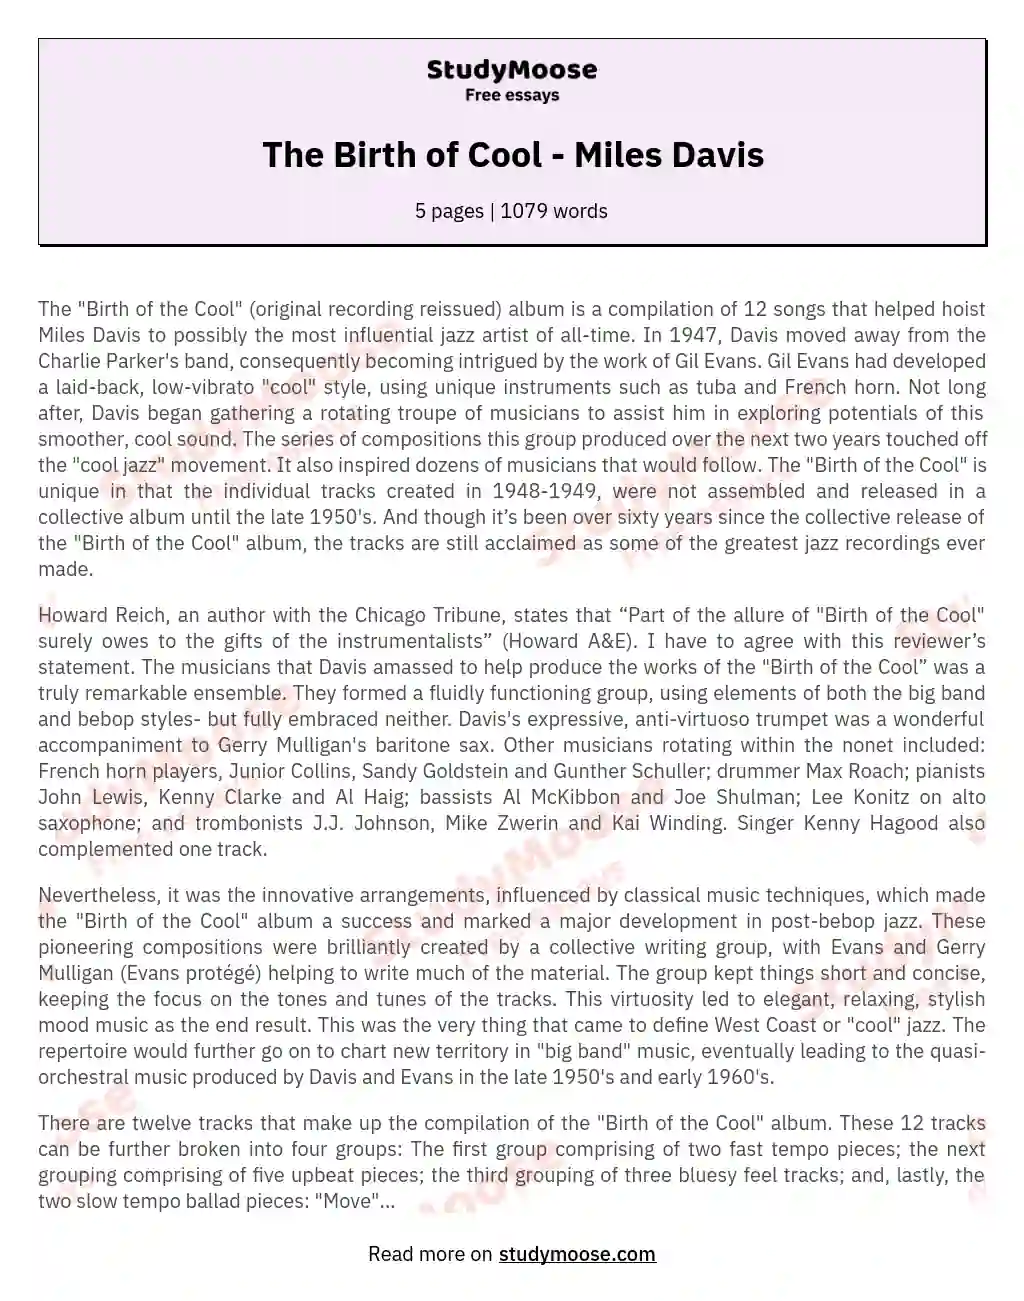 The Birth of Cool - Miles Davis essay